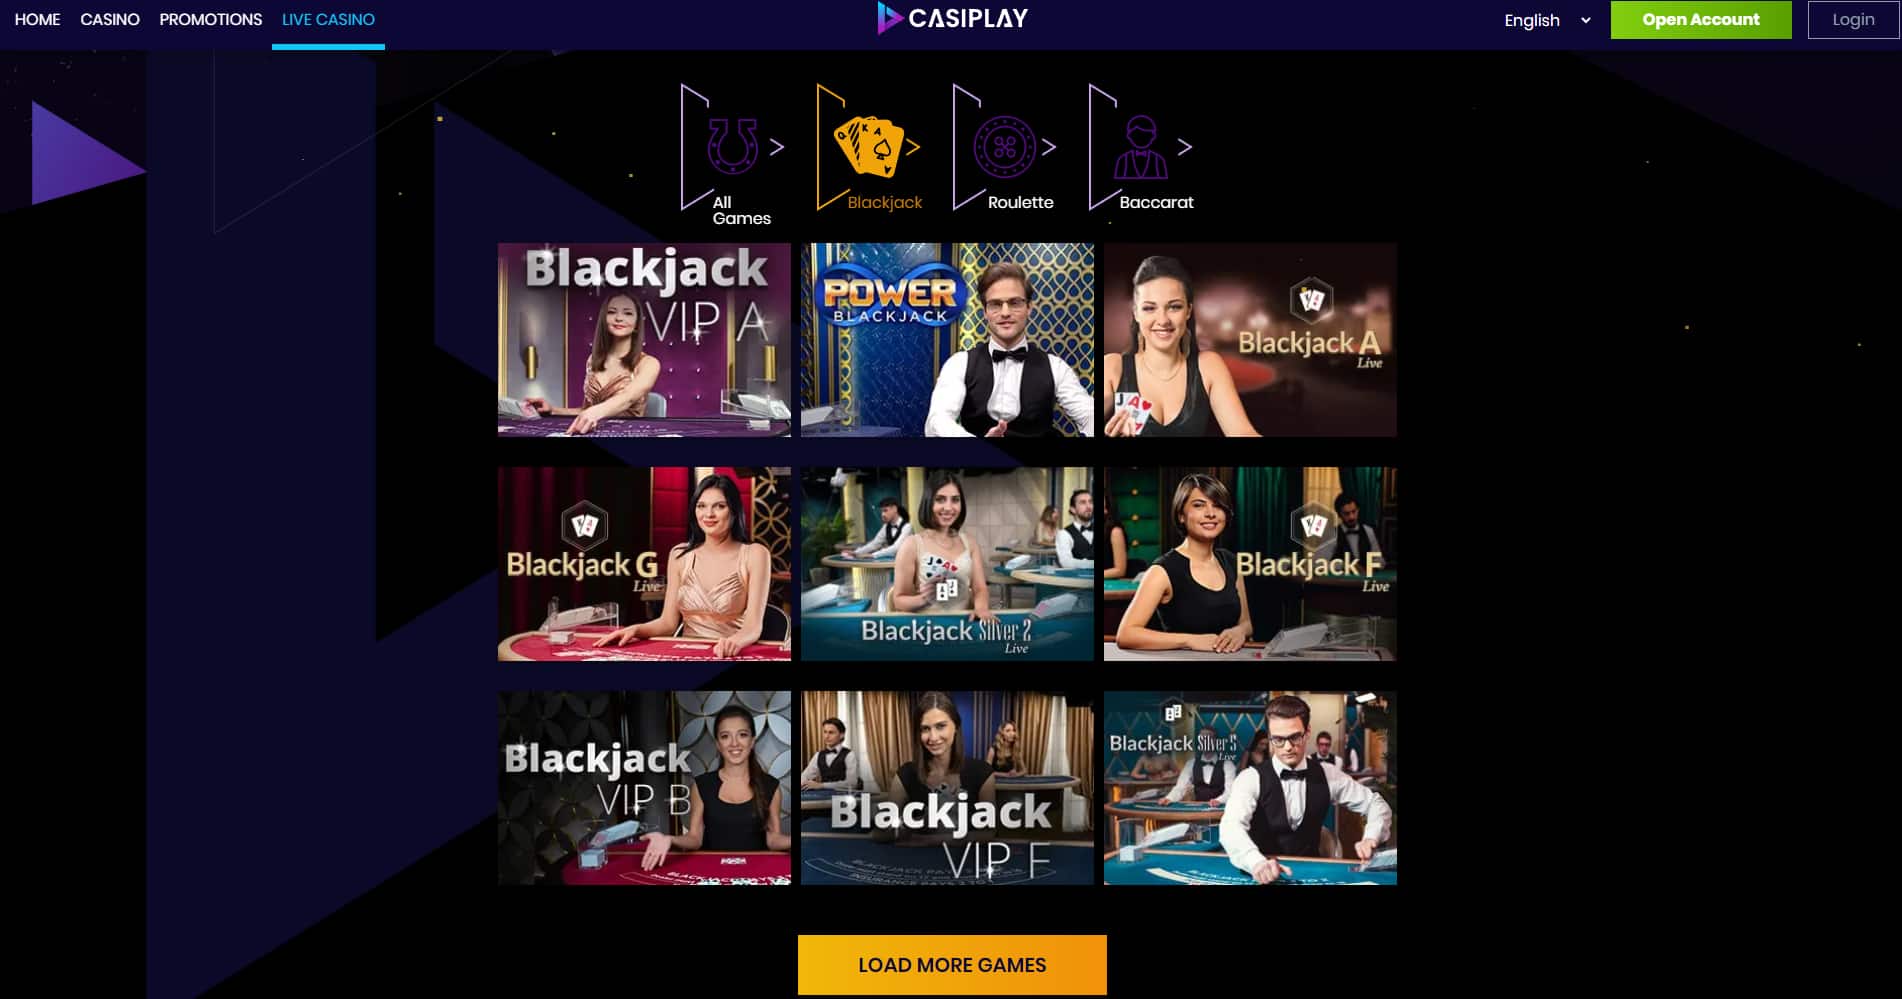 UK online blackjack casino - Casiplay